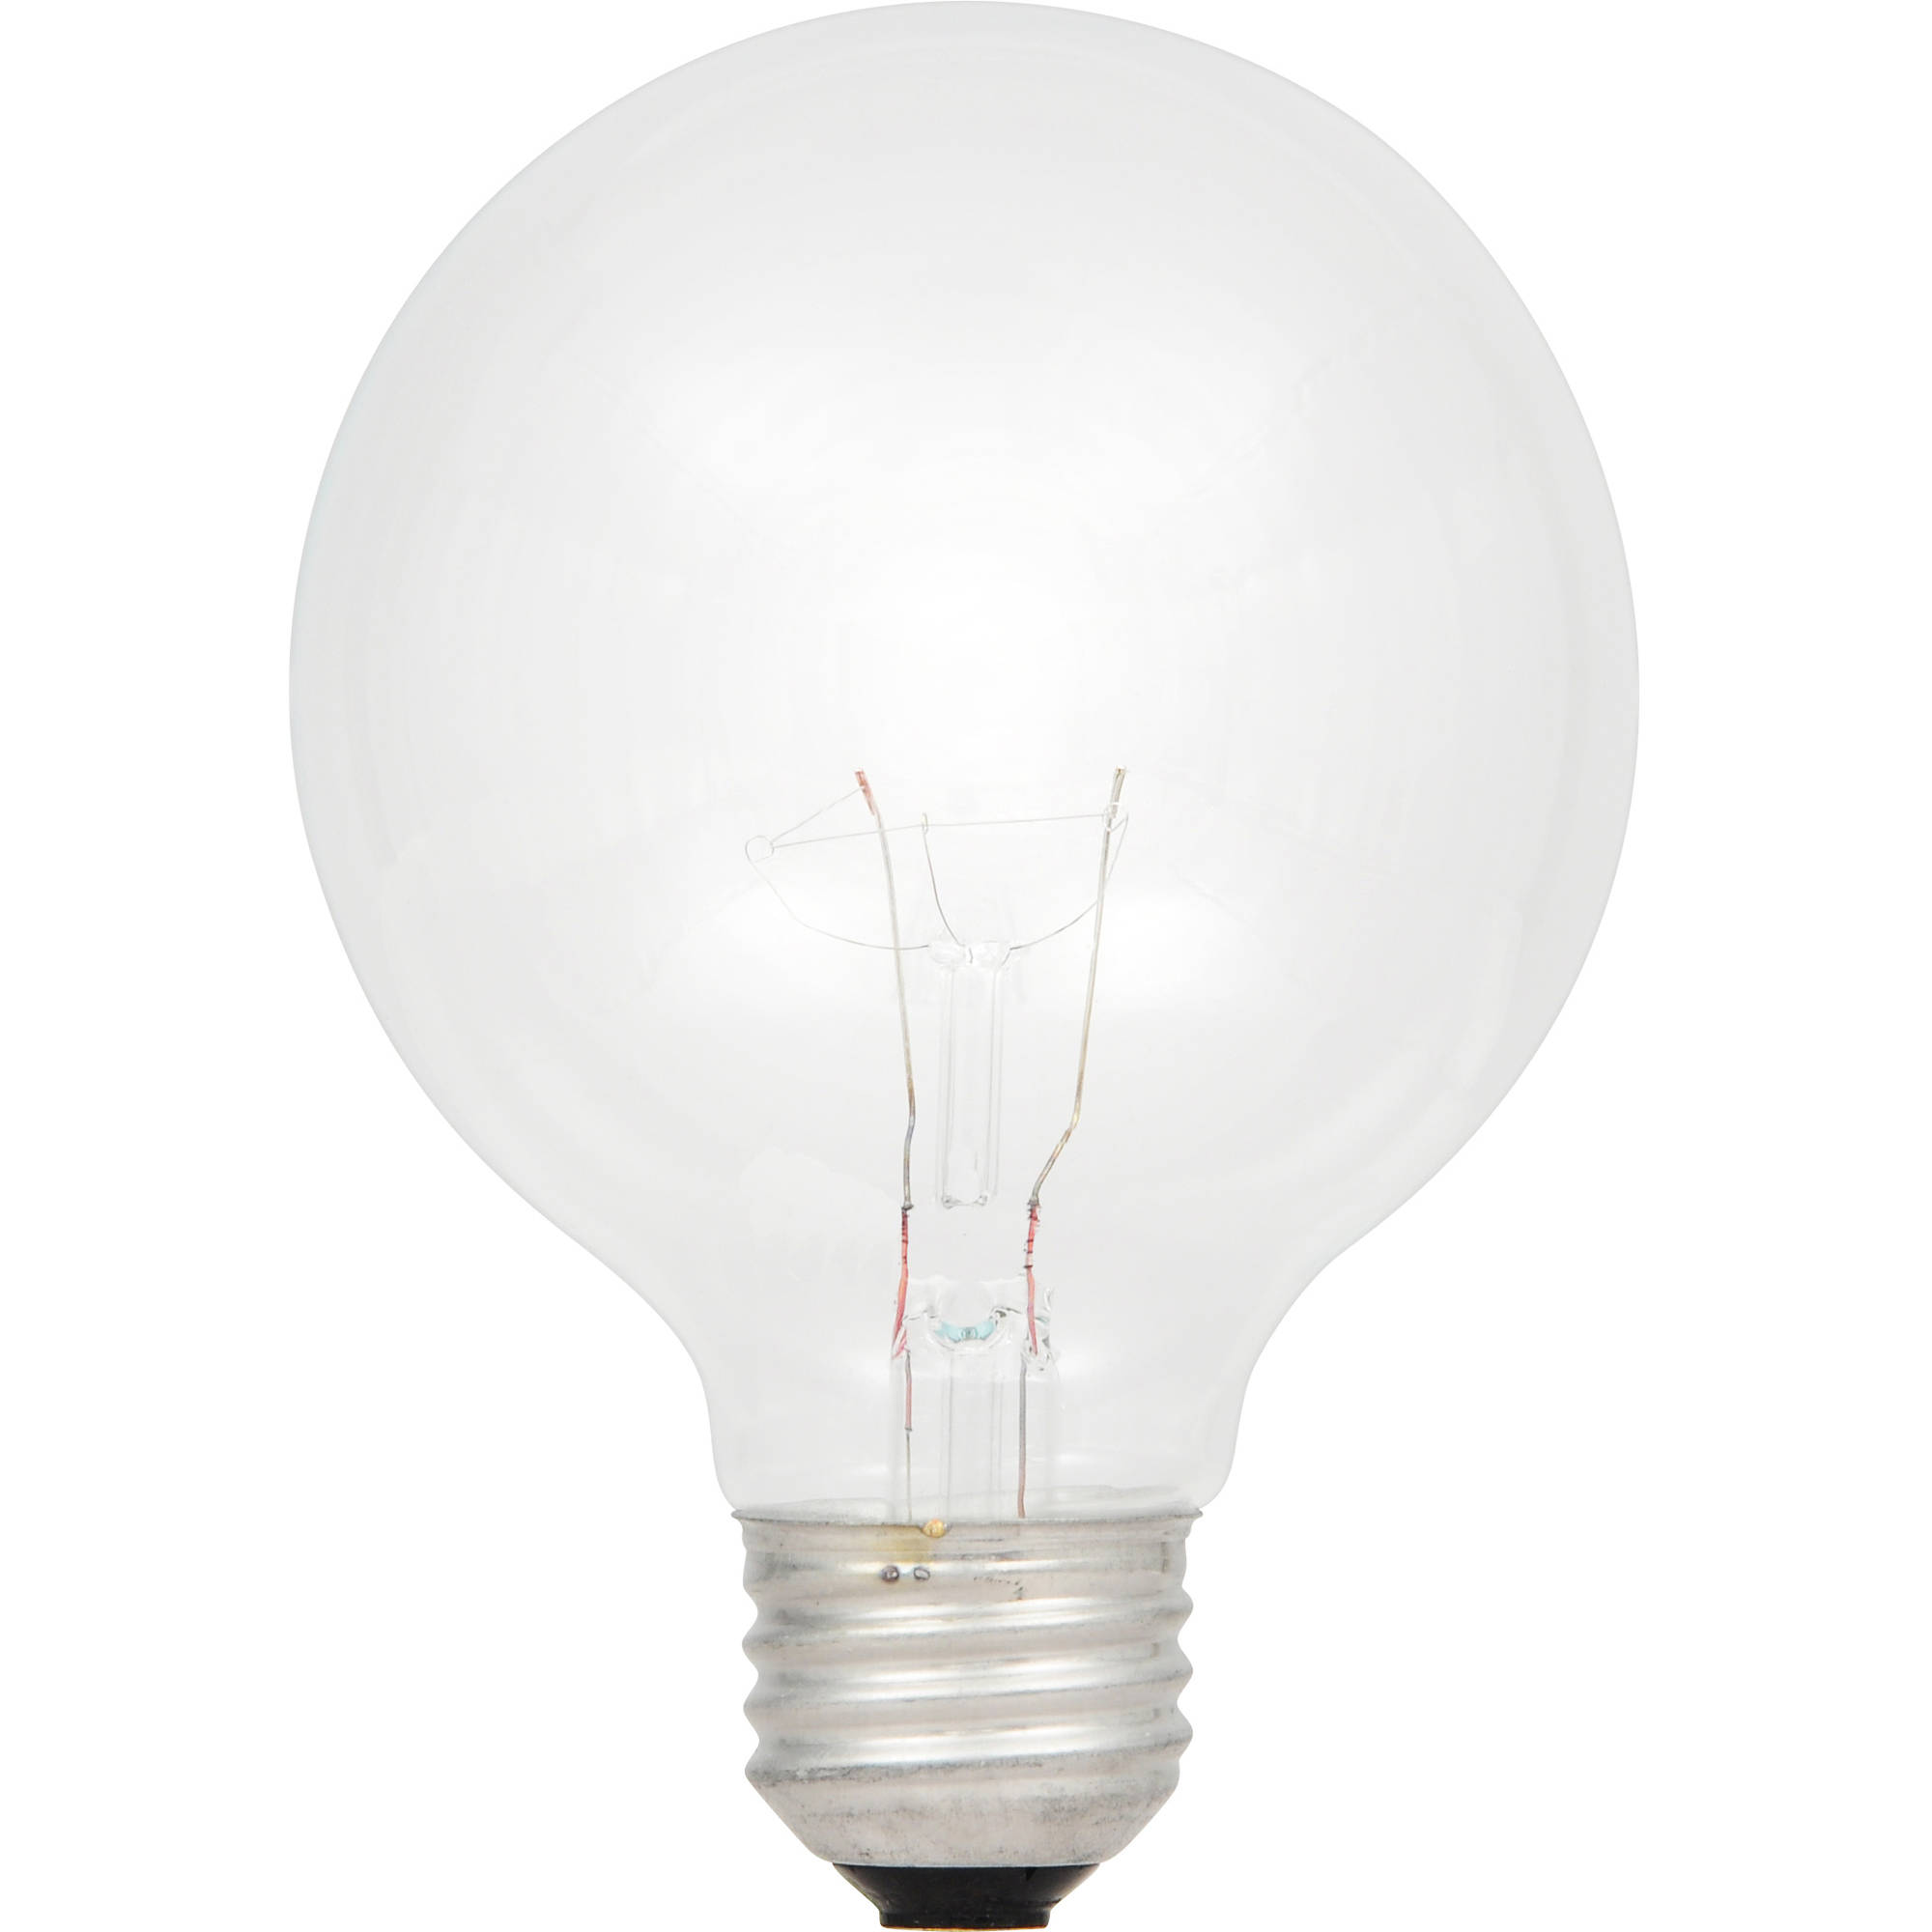 Great Value Globe Light Bulb, Clear, 25W, 3 Count - Walmart.com